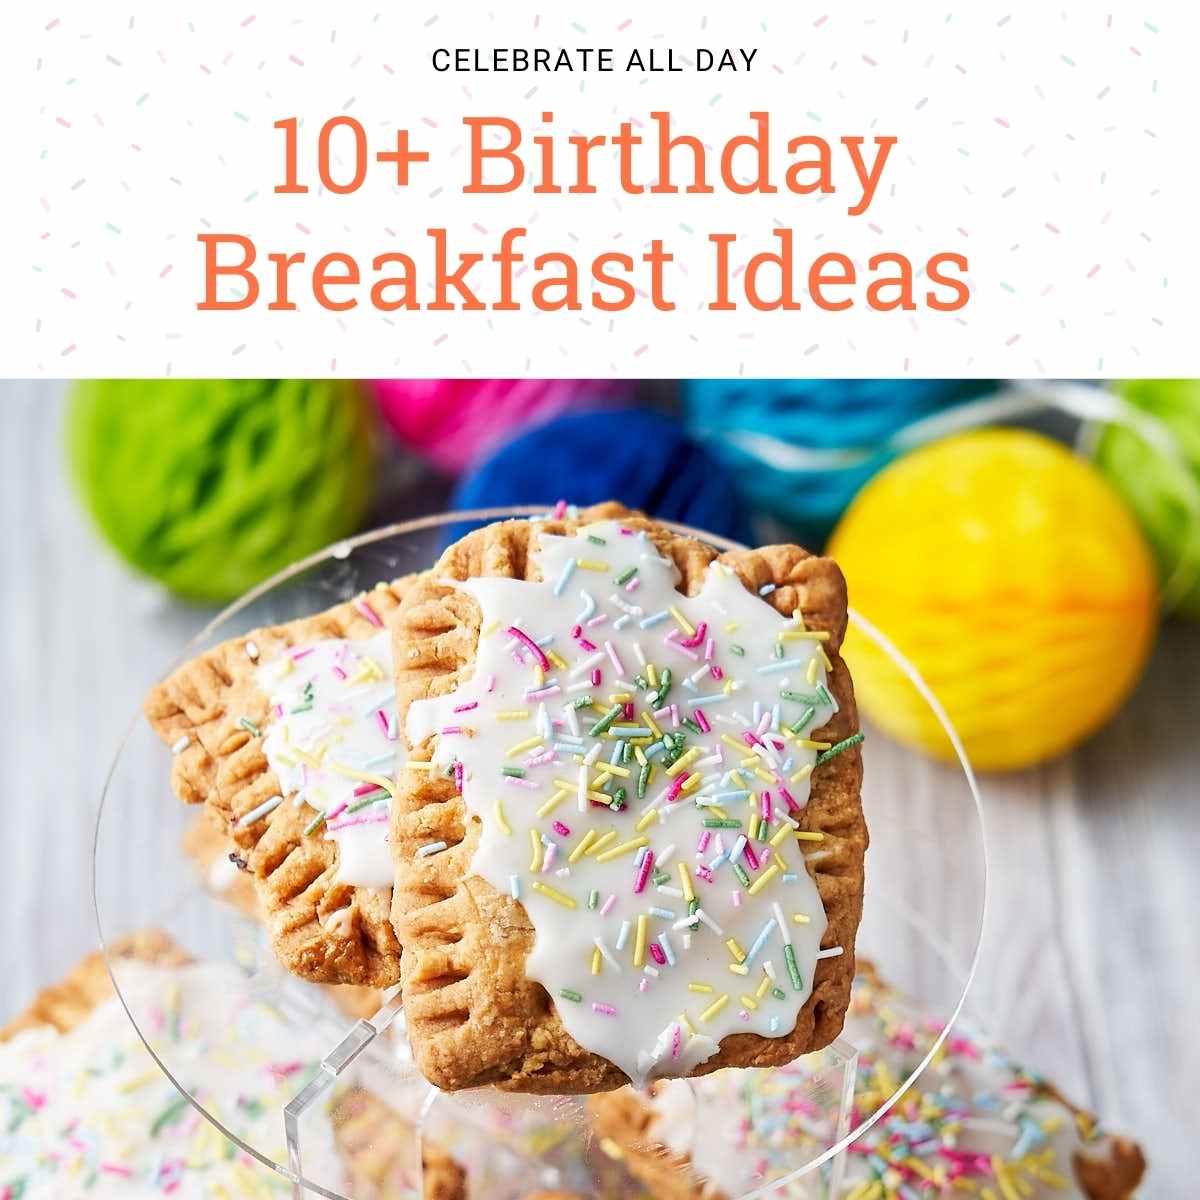 Birthday Breakfast ideas - with text